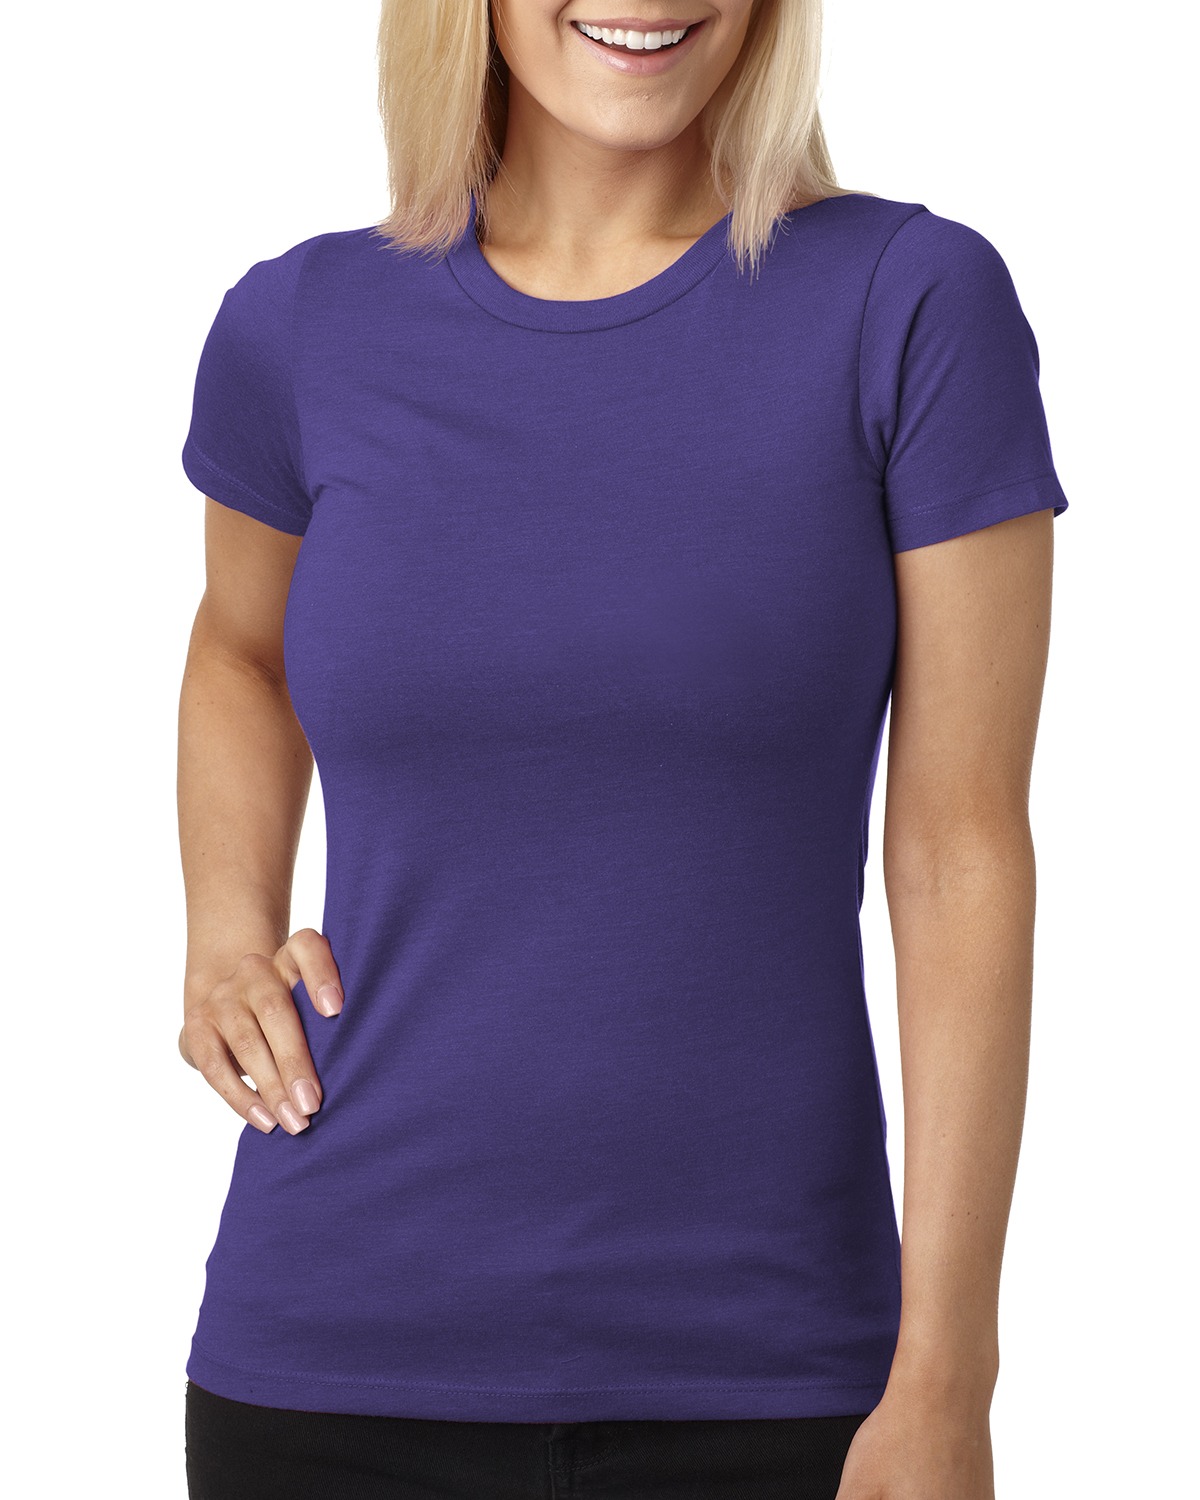 Next Level 6610 - Womens CVC Short Sleeve Crew $5.93 - T-Shirts